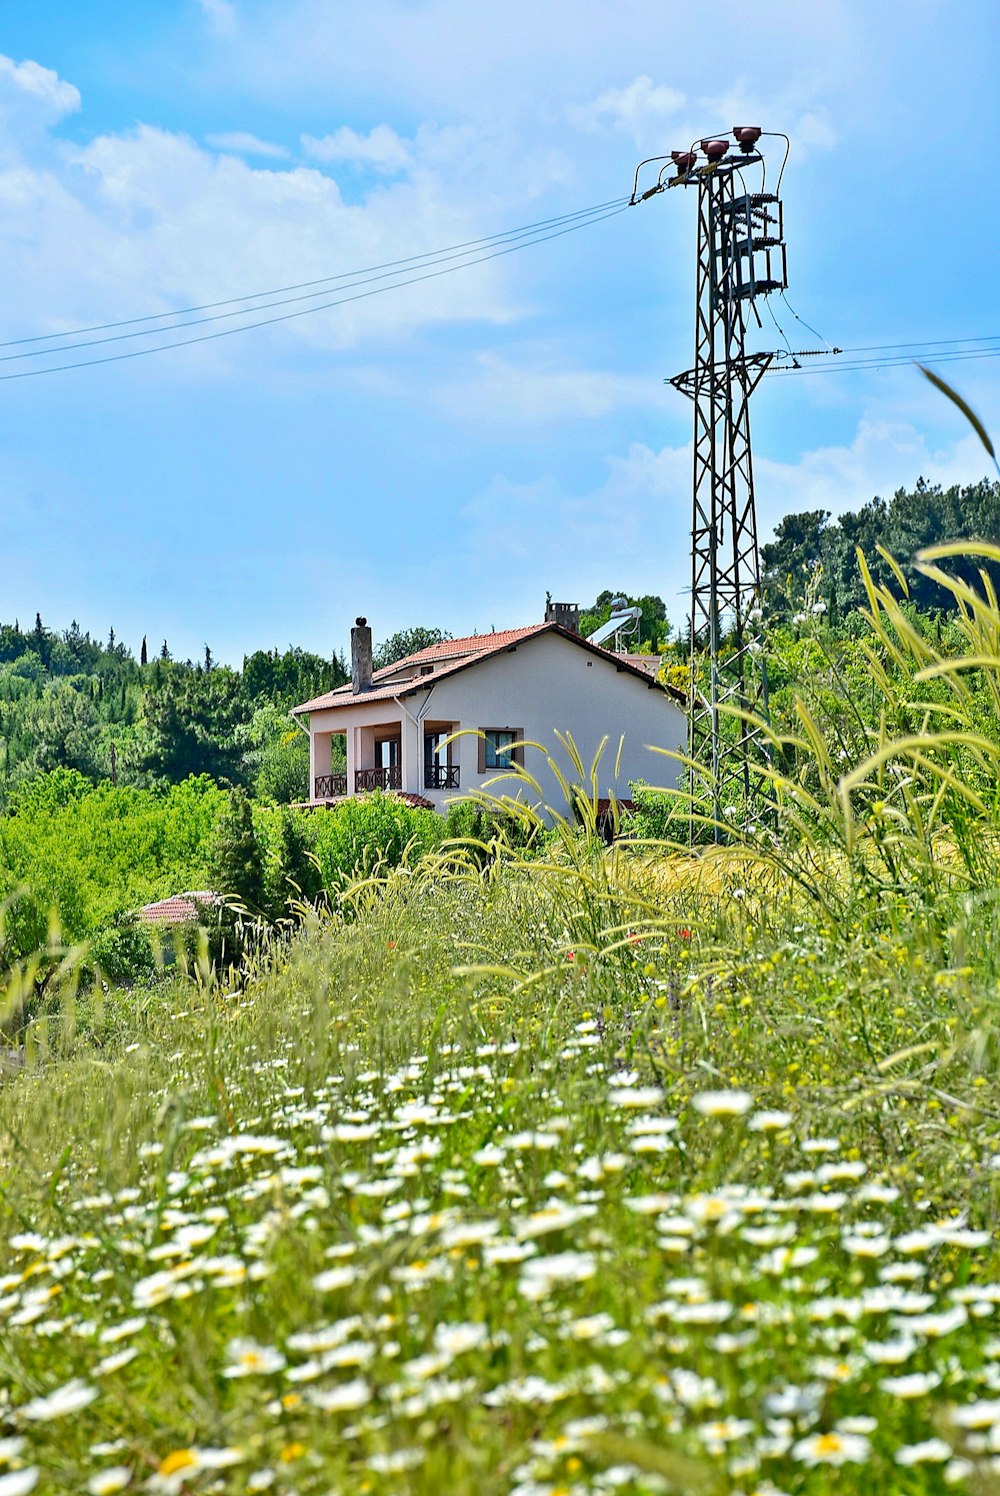 brown wooden house near green grass field under blue sky during daytime